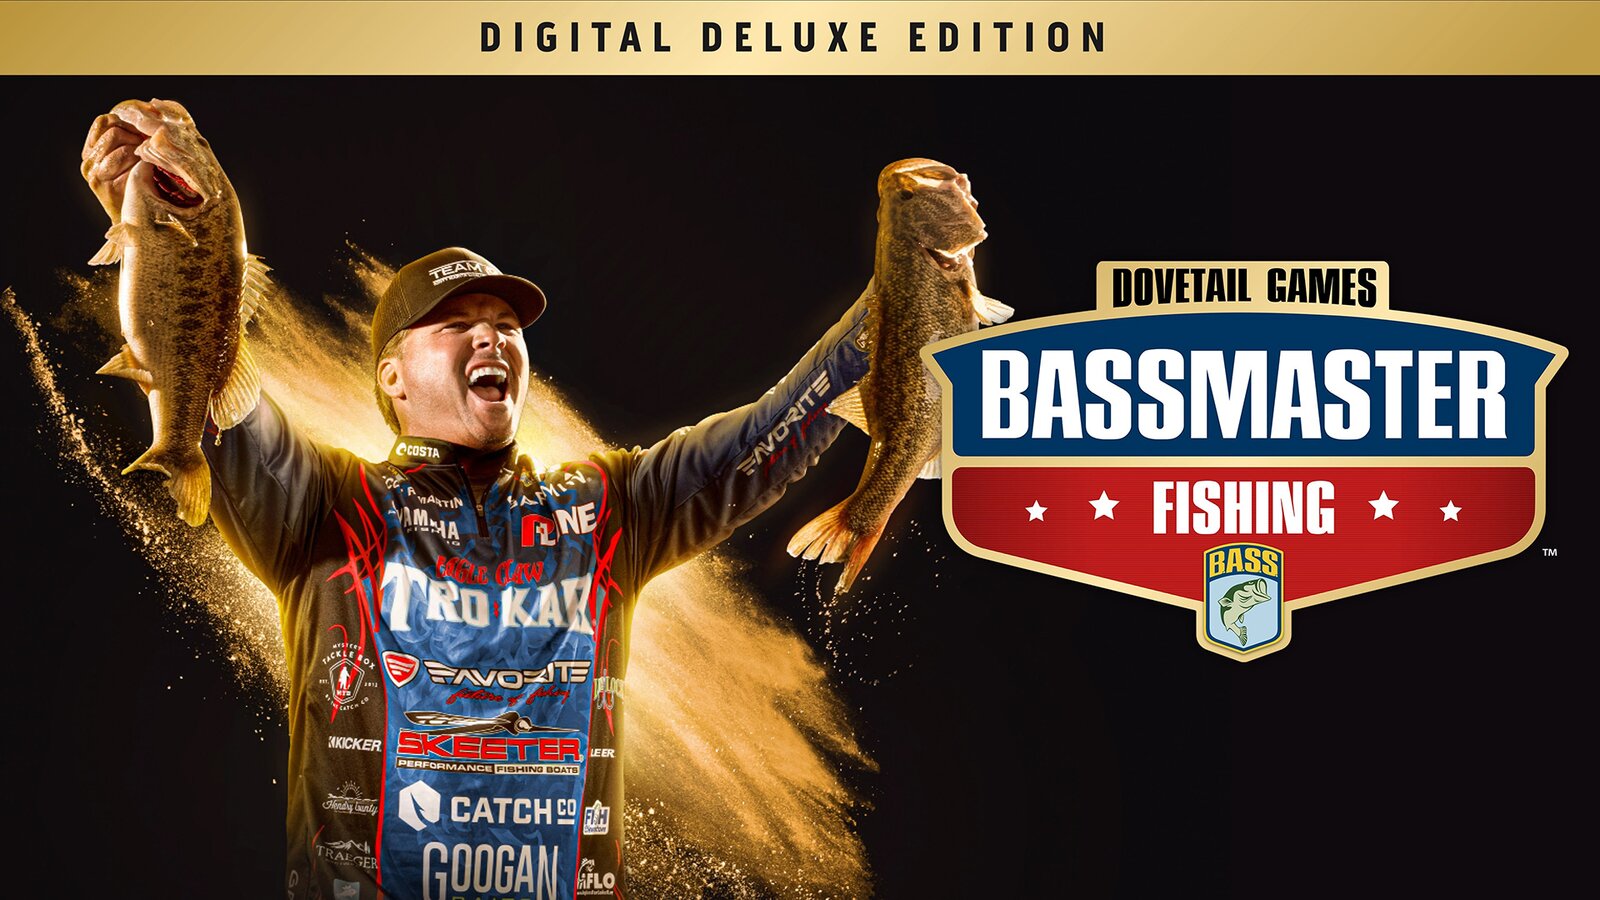 Bassmaster Fishing 2022 - Deluxe Edition